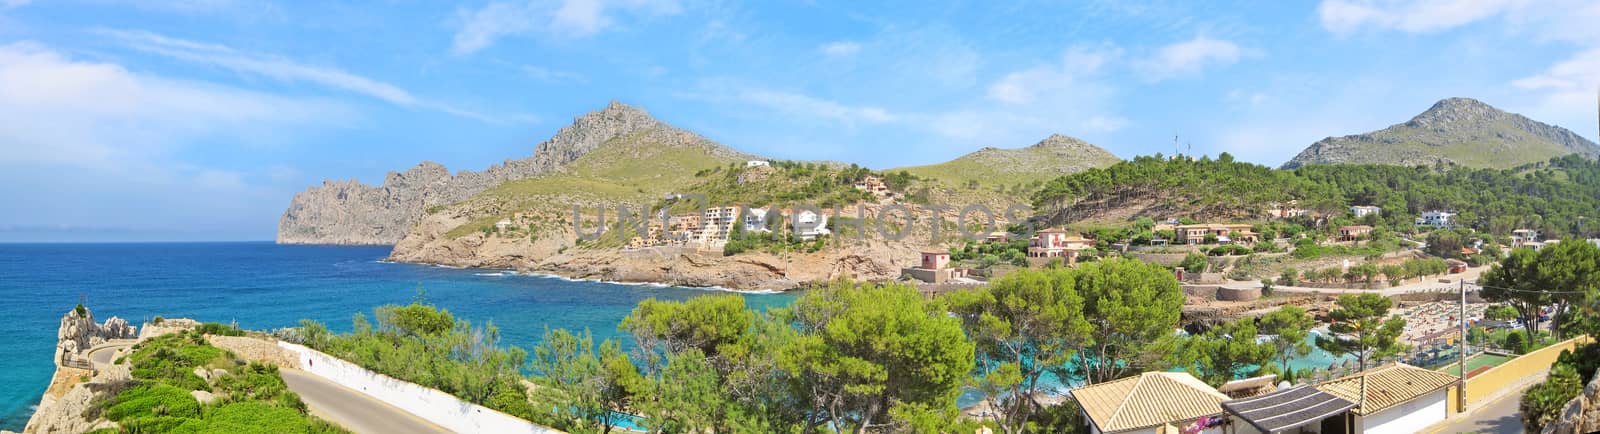 Bay Cala Molins in Cala Sant Vicenc, Majorca, Spain - panorama view